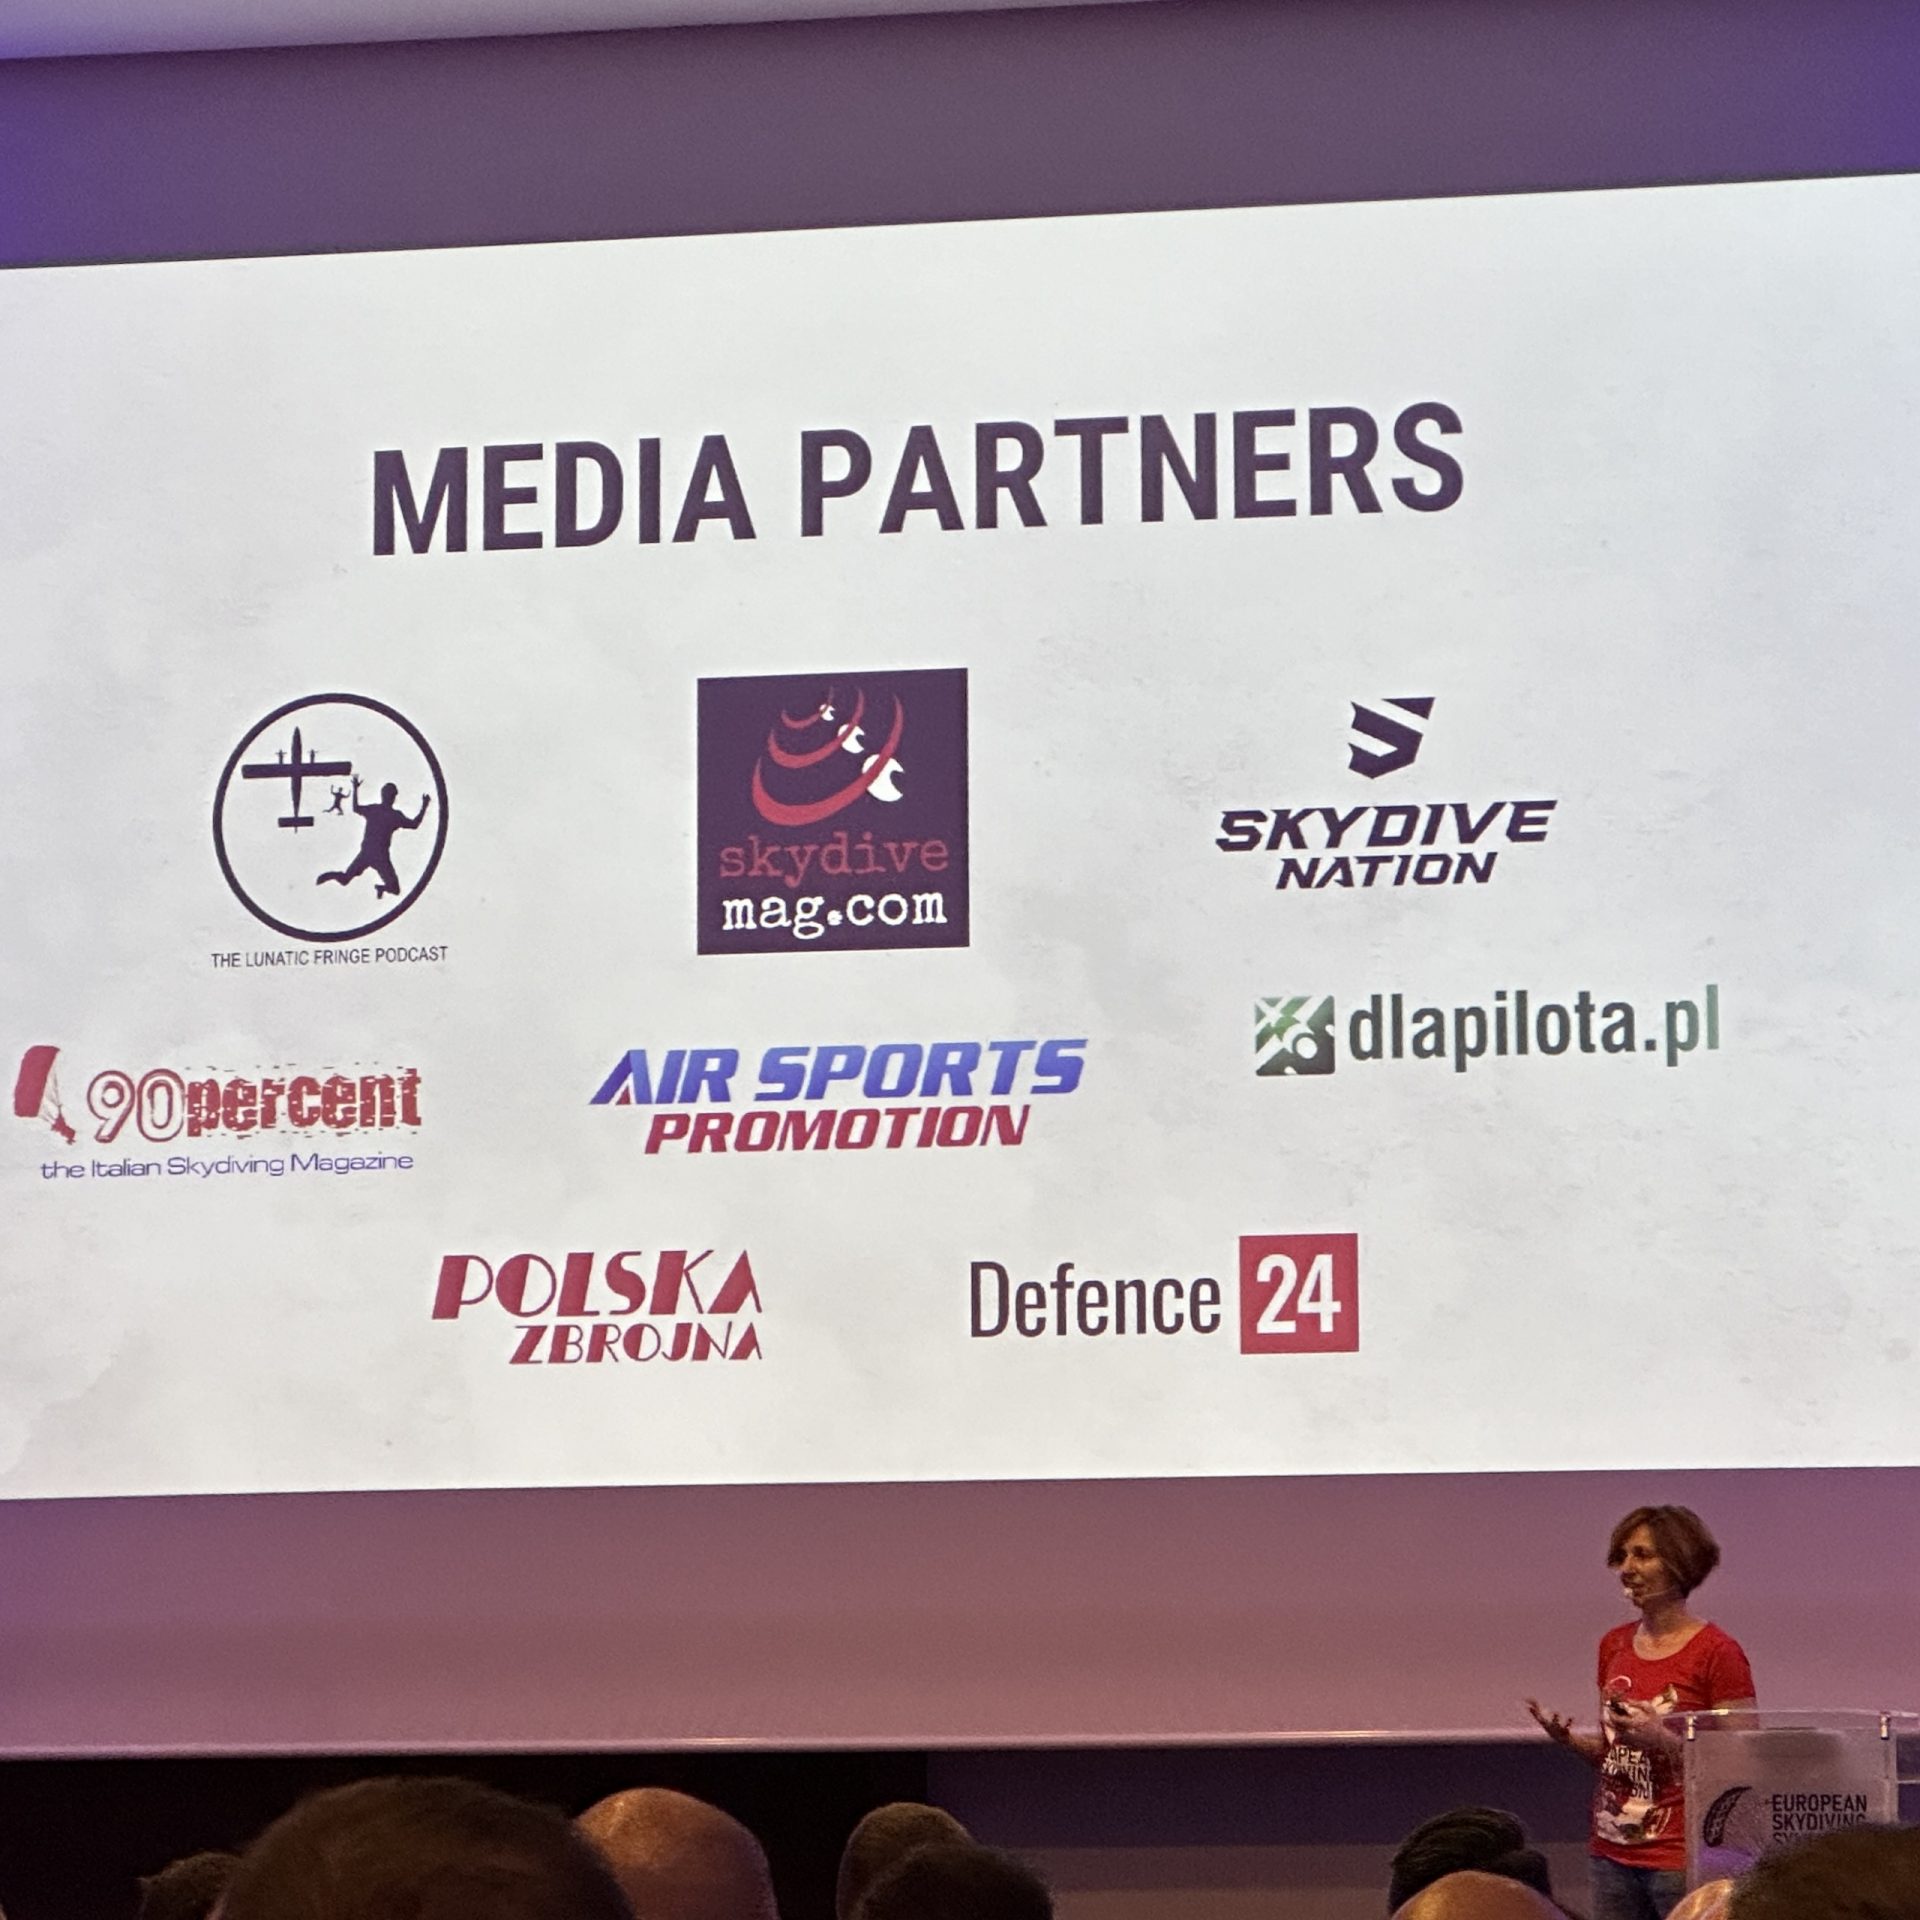 Skydive-Nation.com Media Partner European Skydiving Symposium